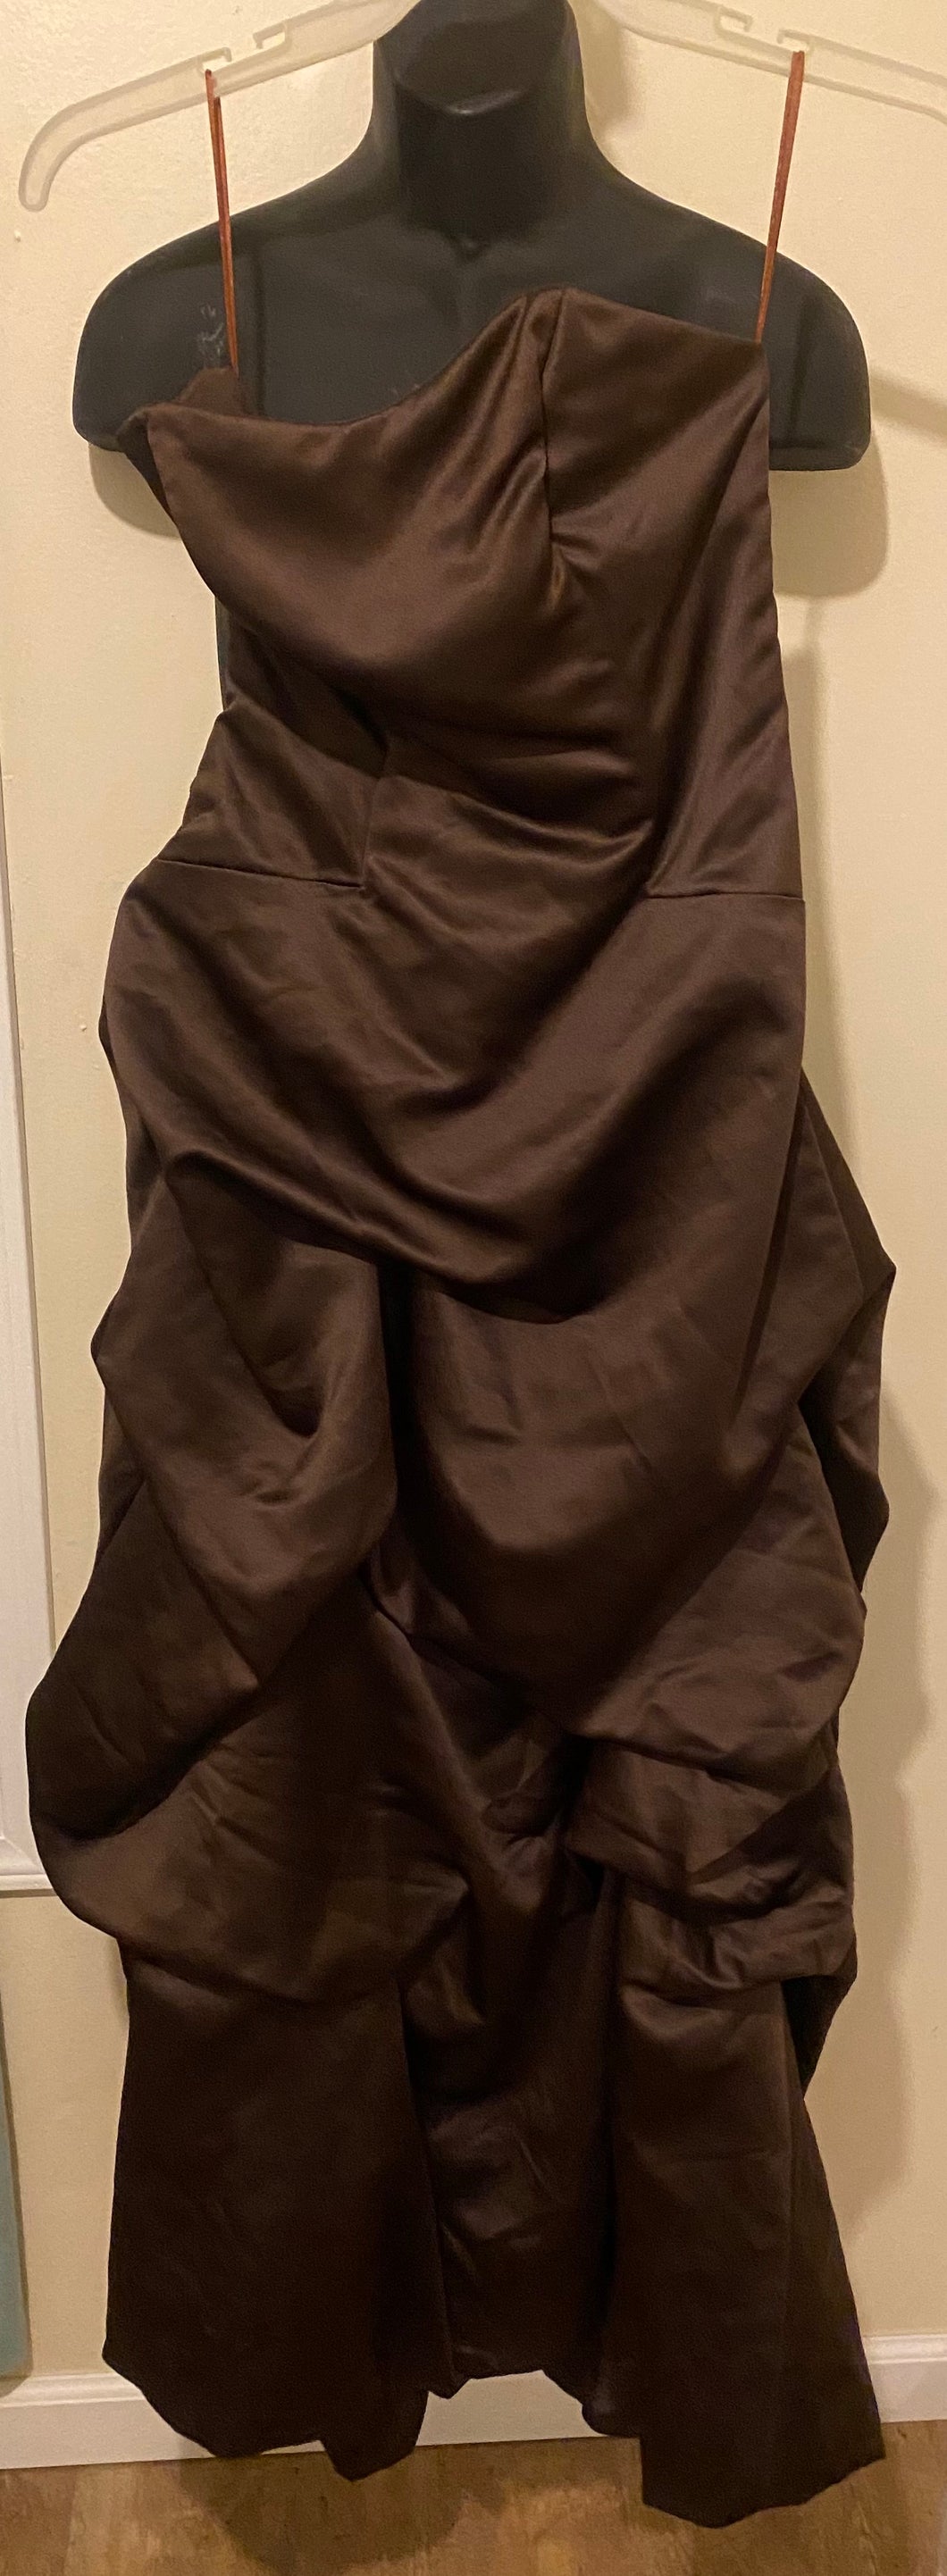 ADAM100-H Strapless Brown dress. Size 8